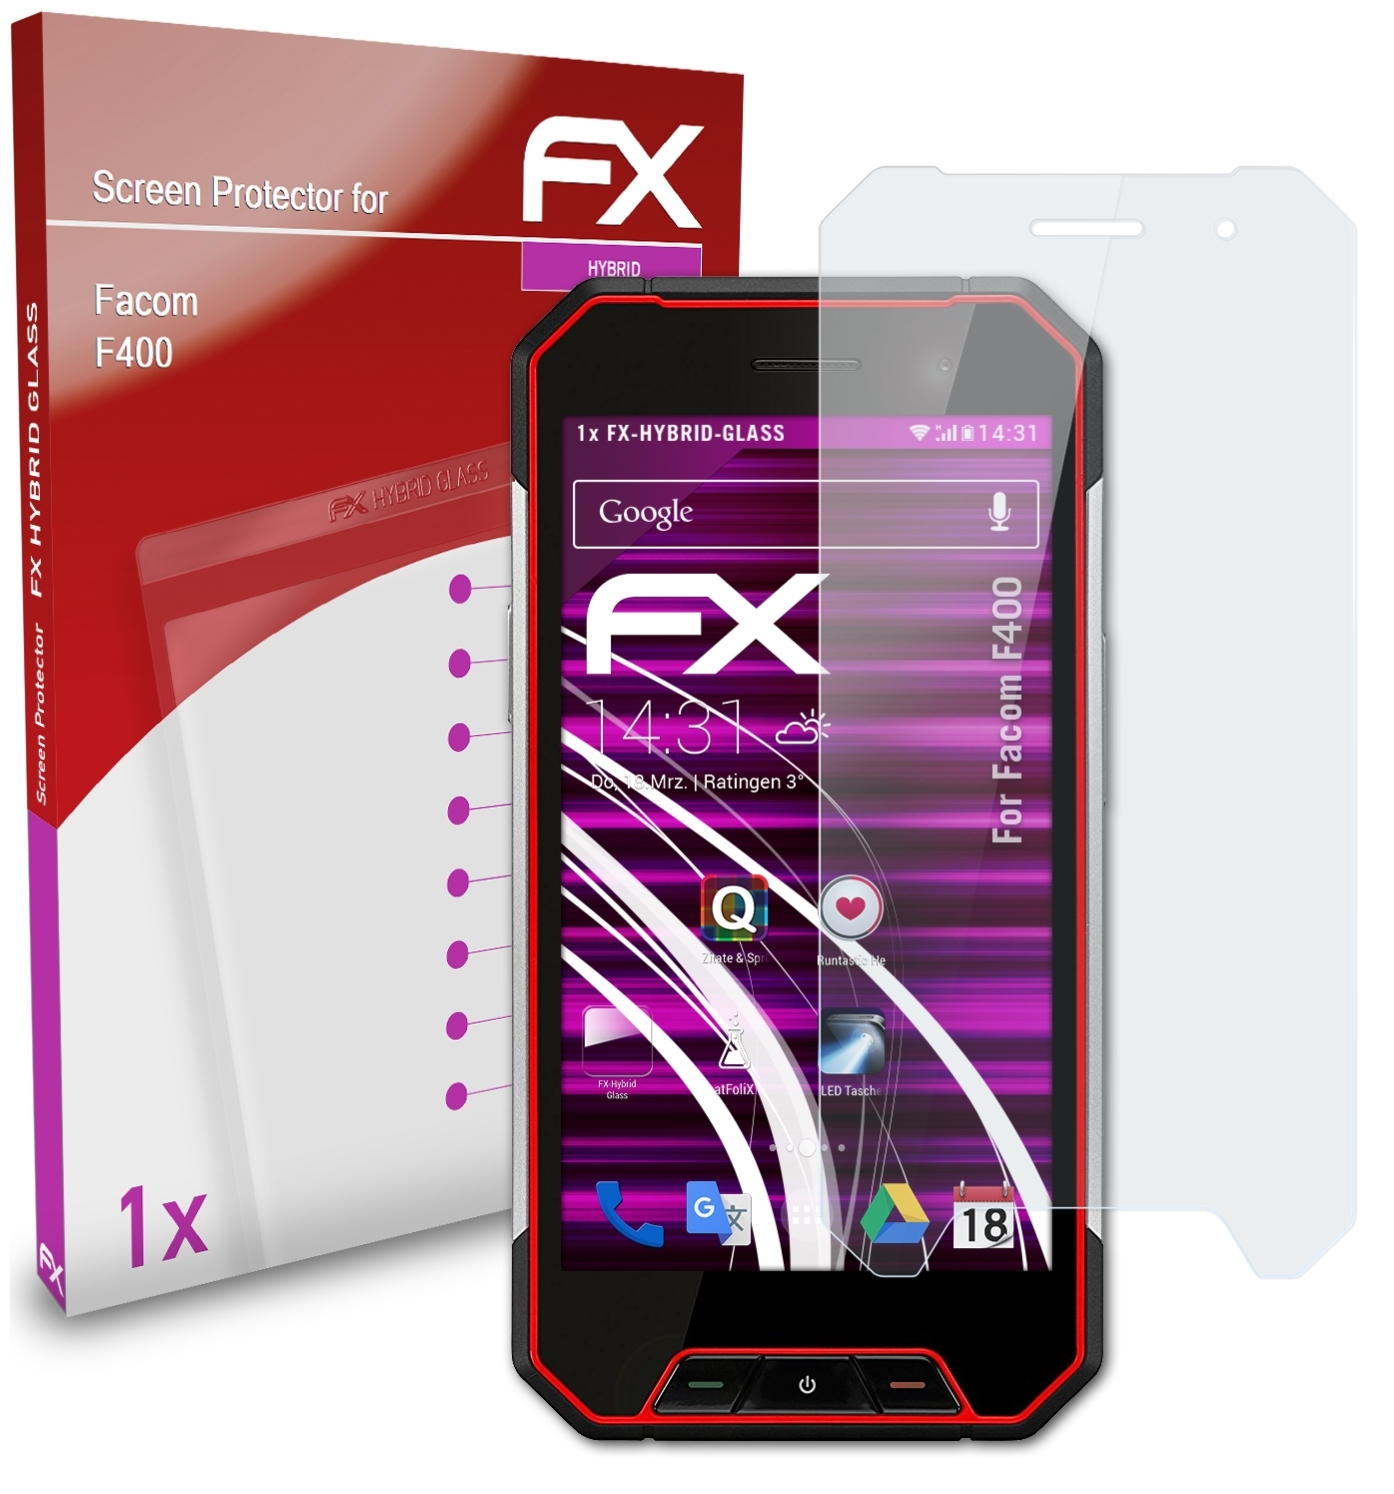 FX-Hybrid-Glass F400) ATFOLIX Facom Schutzglas(für